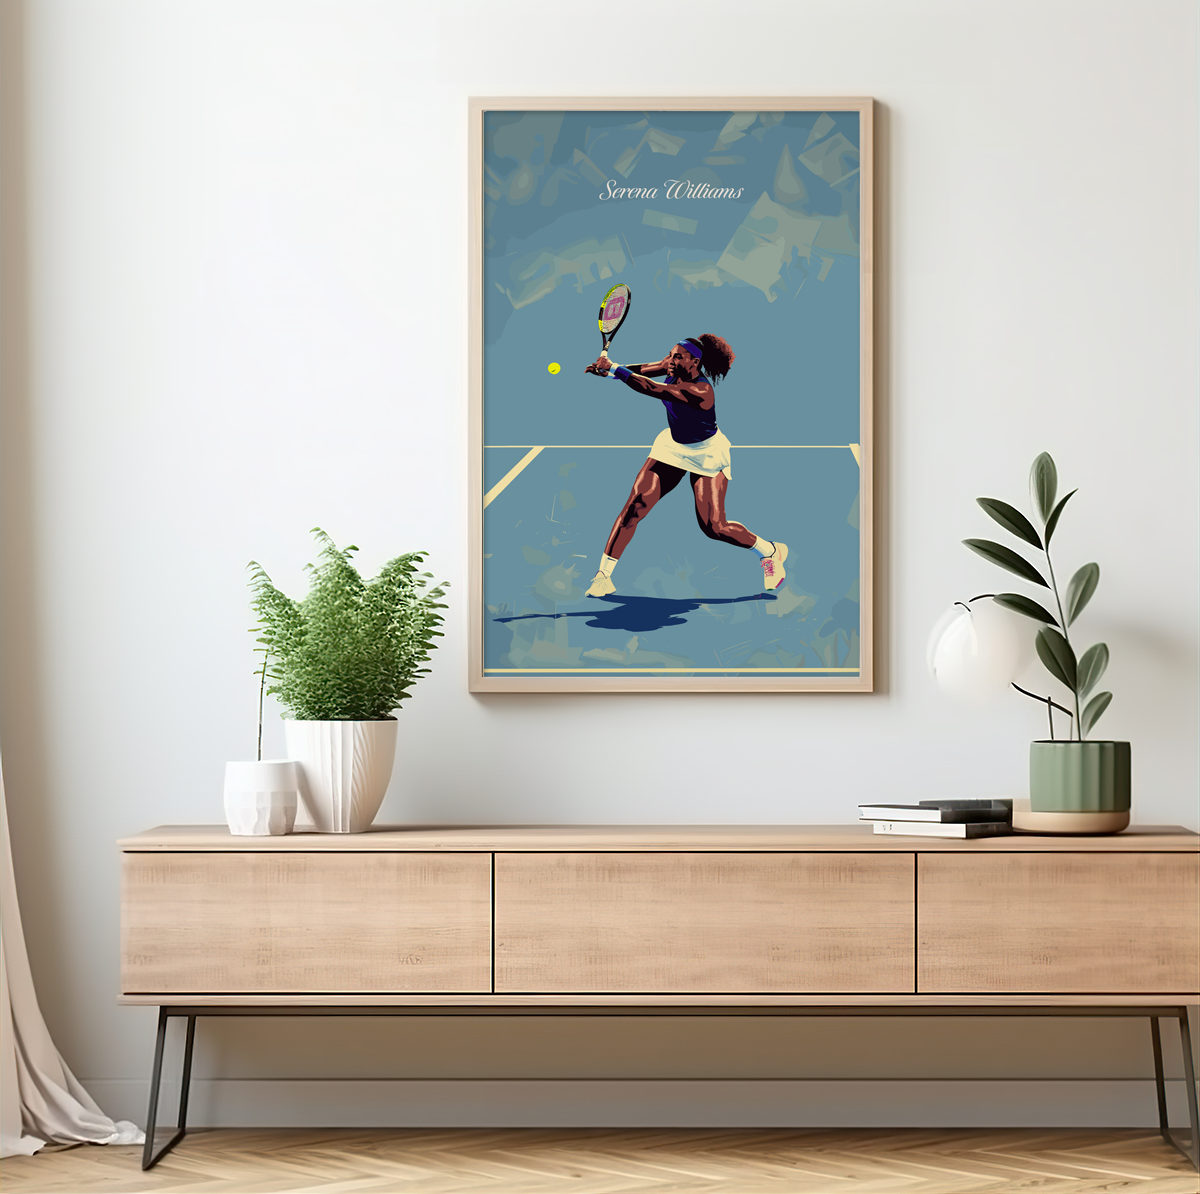 Serena Williams poster by bon voyage design